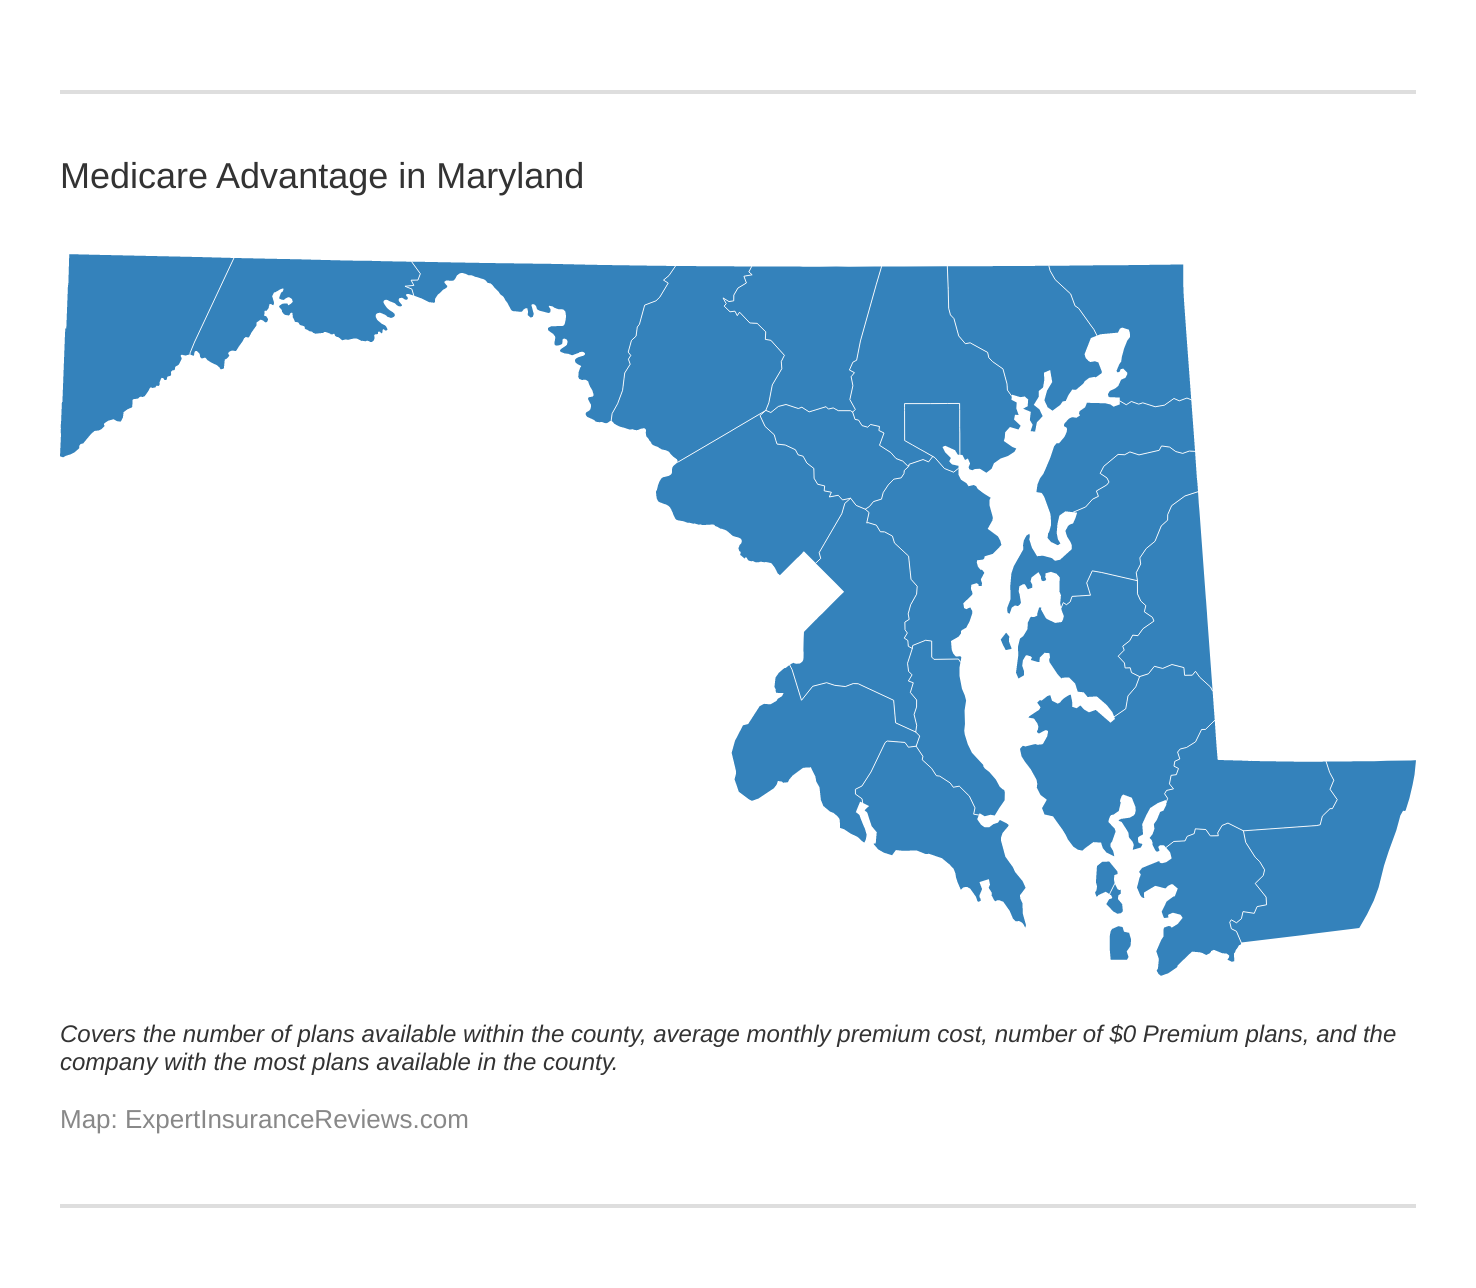 Medicare Advantage in Maryland